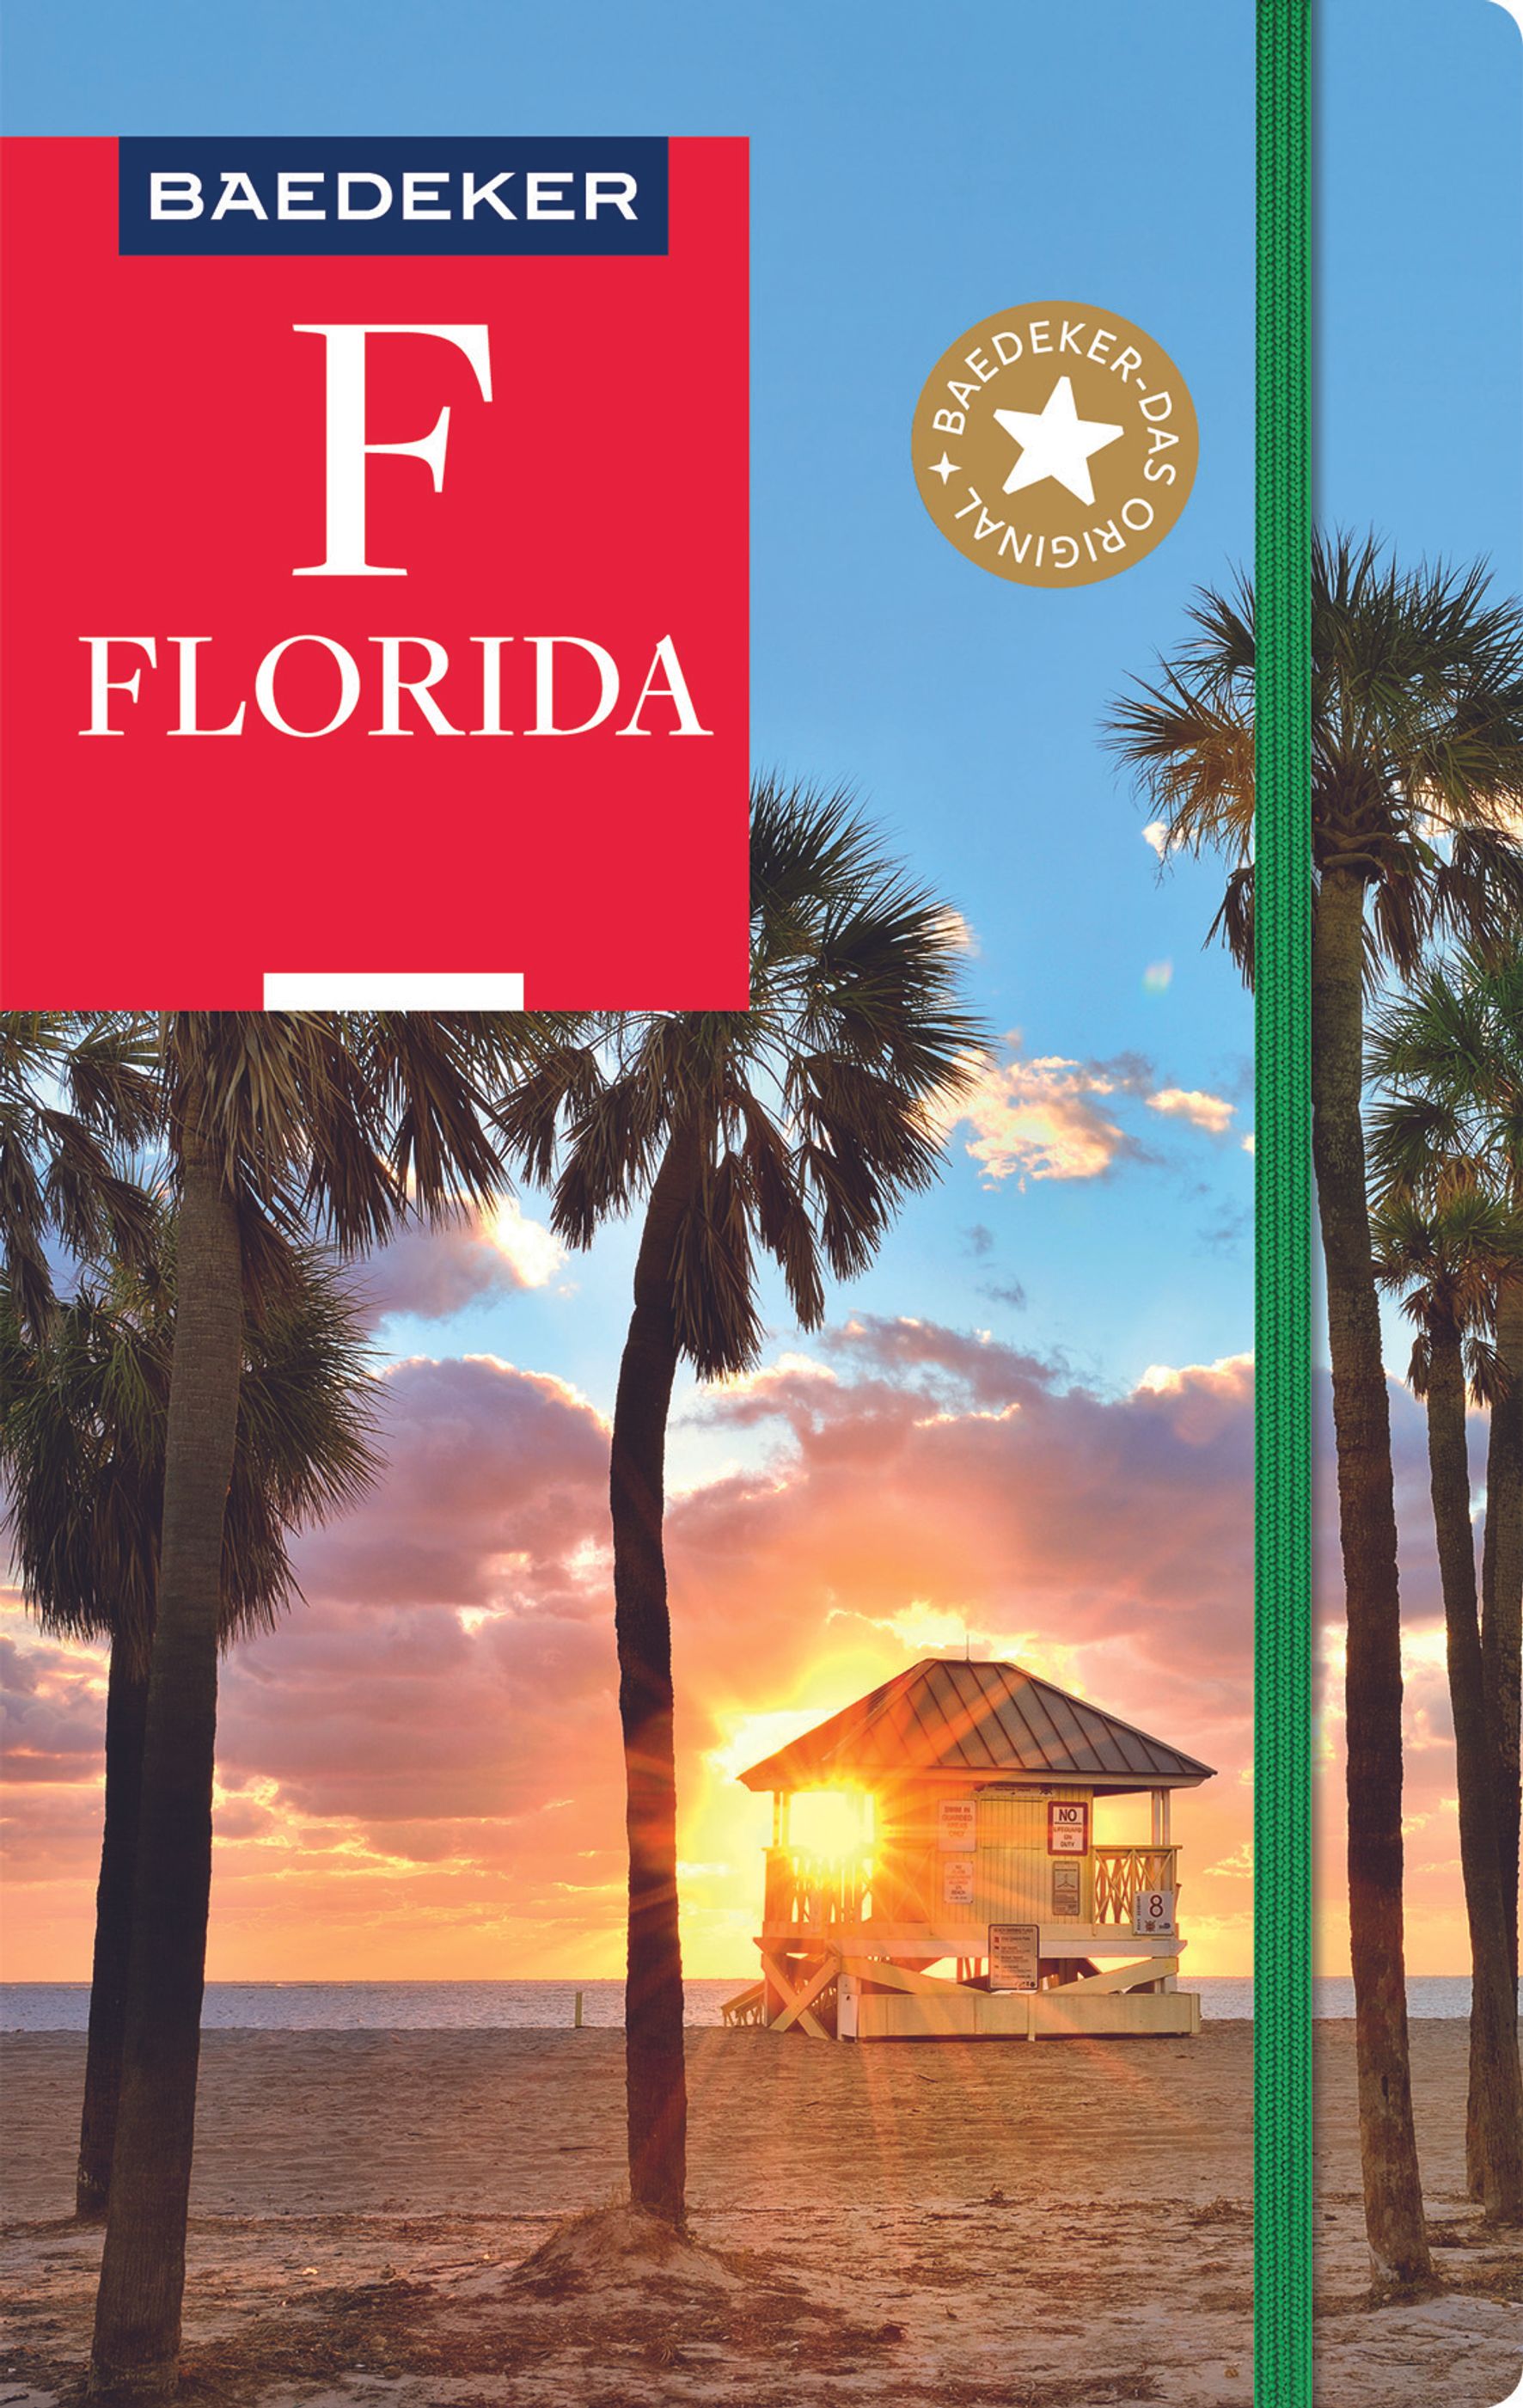 Baedeker Florida (eBook)